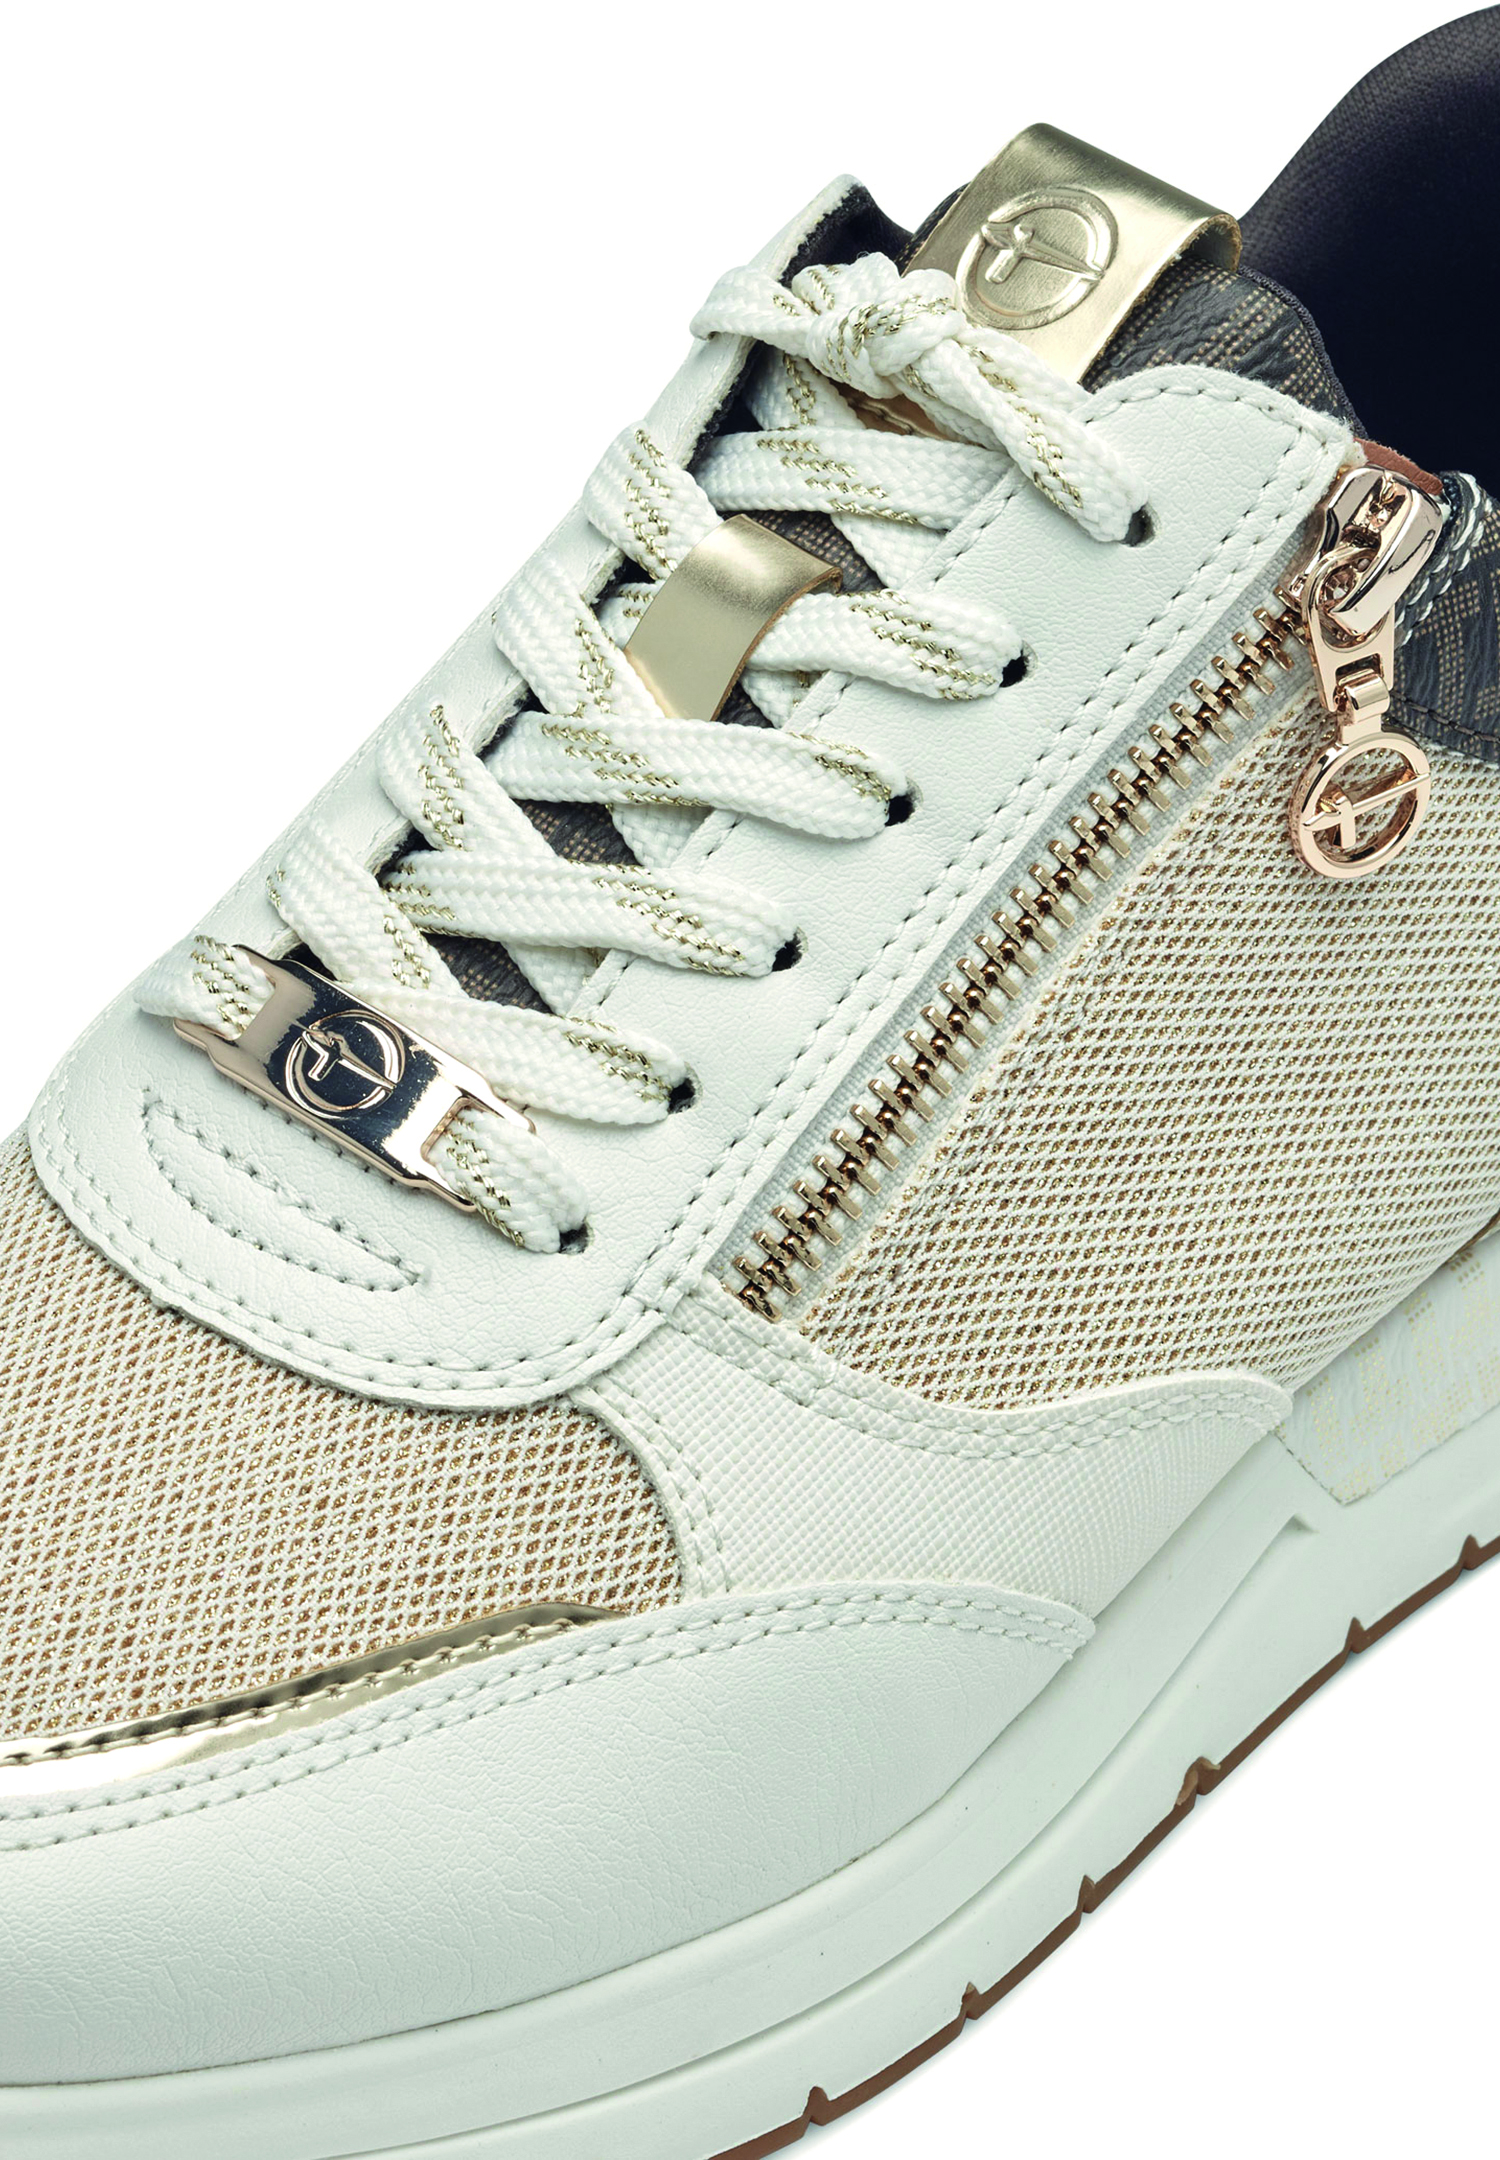 Tamaris Damen Low Top Sneaker Frauen Schuhe Vegan M2373241 weiß/braun/gold